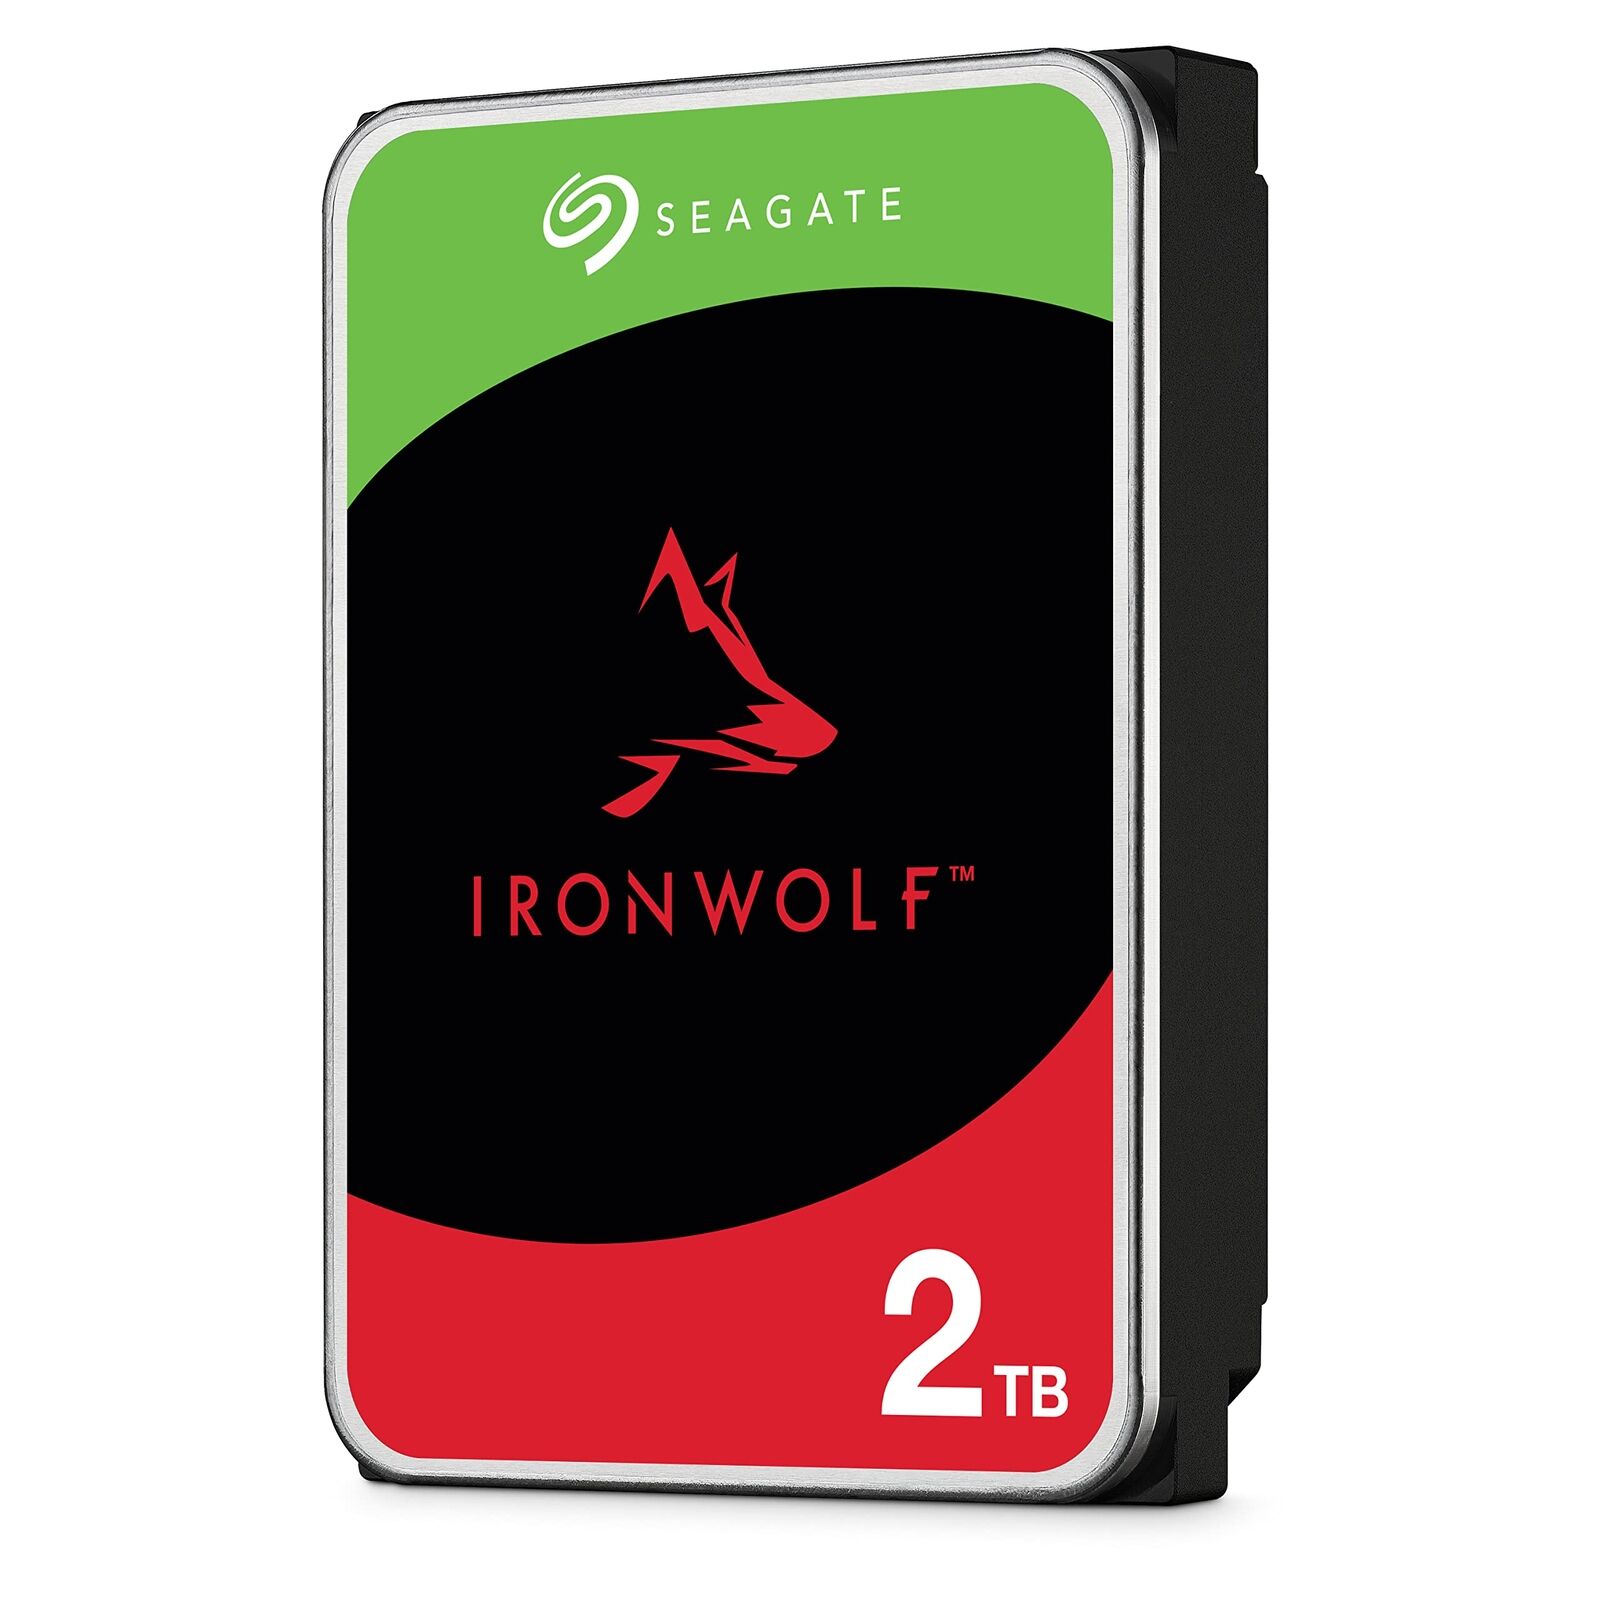 Seagate IronWolf, 2 TB, Enterprise Internal NAS HDD – CMR 3.5 Inch, SATA 6 Gb/s,